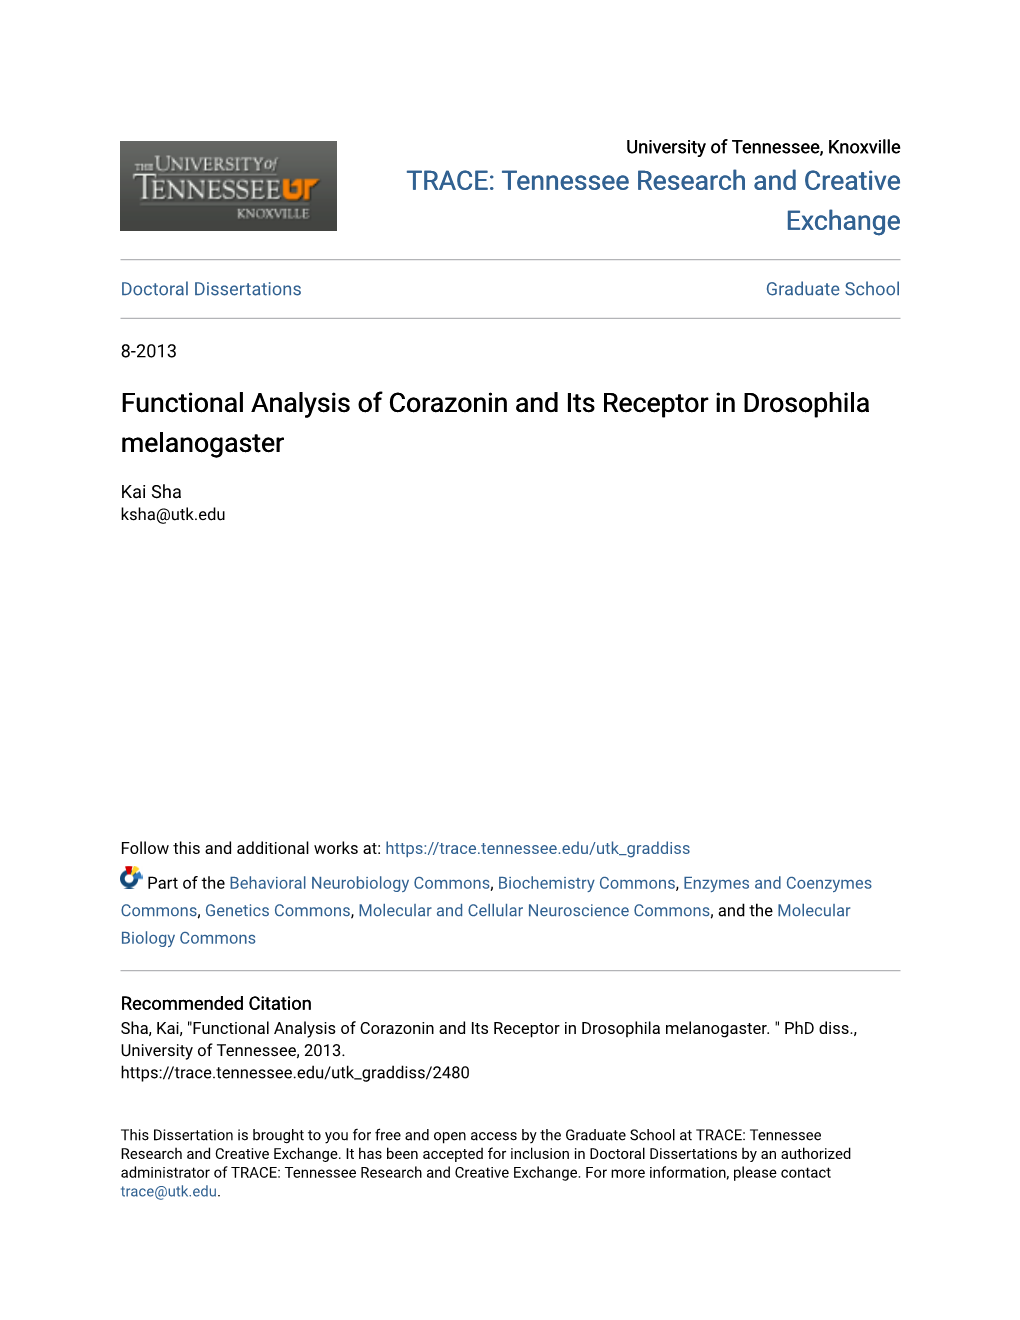 Functional Analysis of Corazonin and Its Receptor in Drosophila Melanogaster